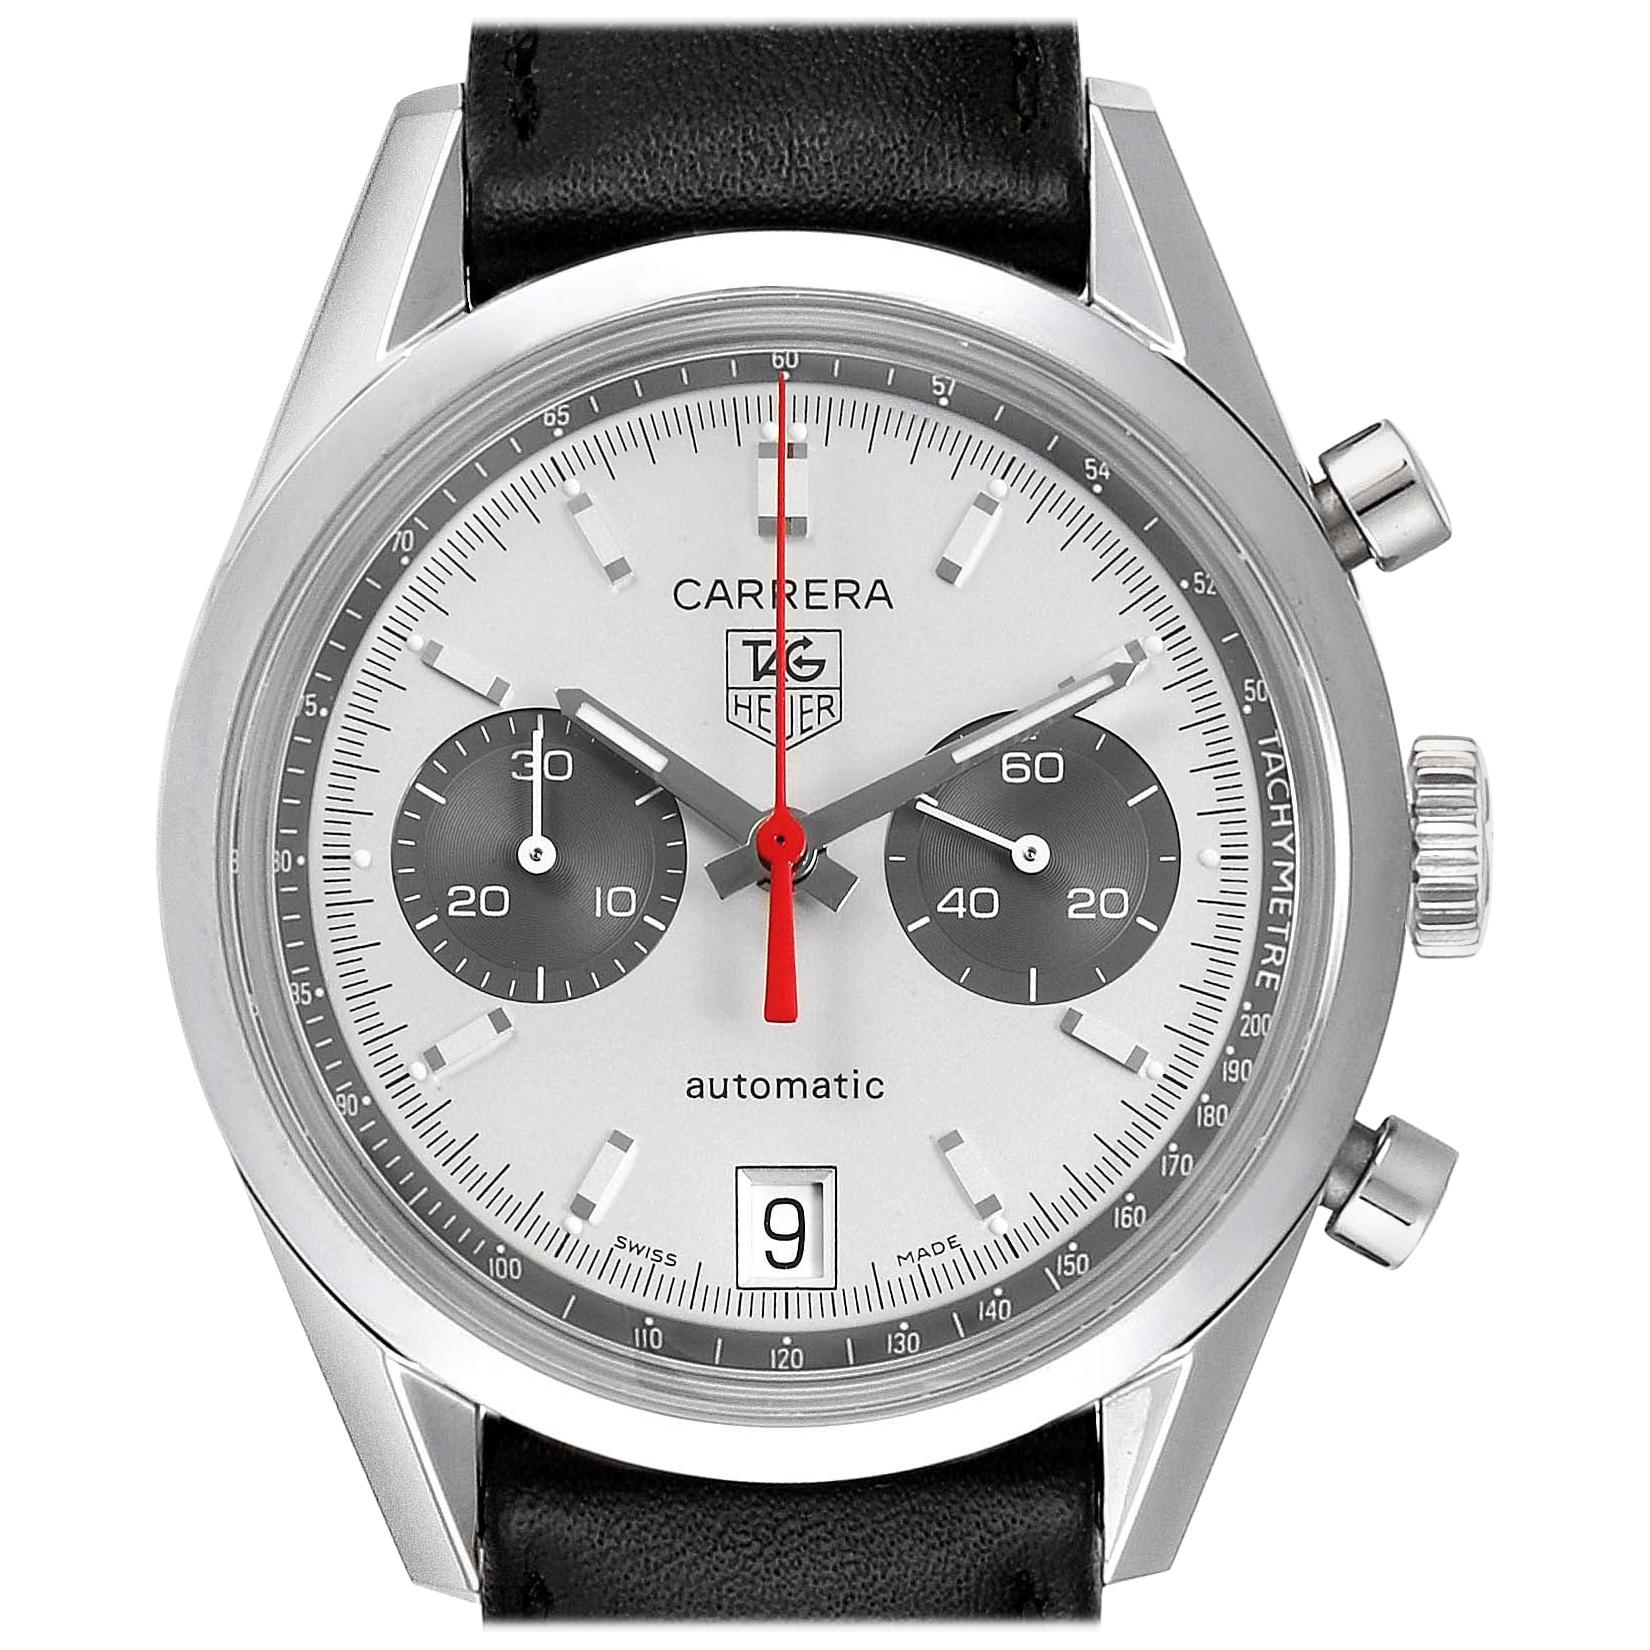 TAG Heuer Carrera Chronograph Limited Edition Men's Watch CV2117 Box Card